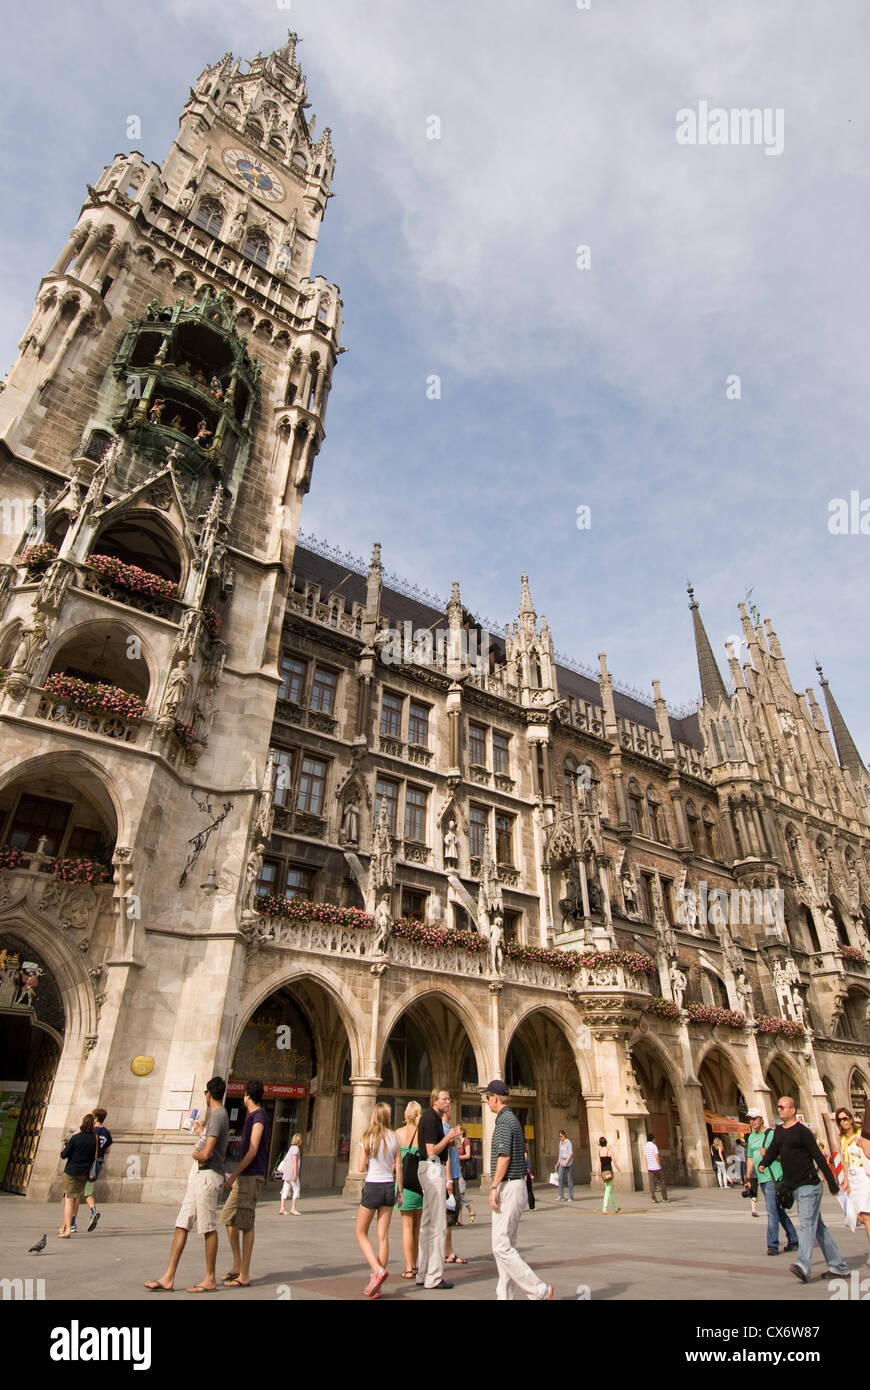 The famous Glockenspiel of Frankfurt, Germany. Stock Photo